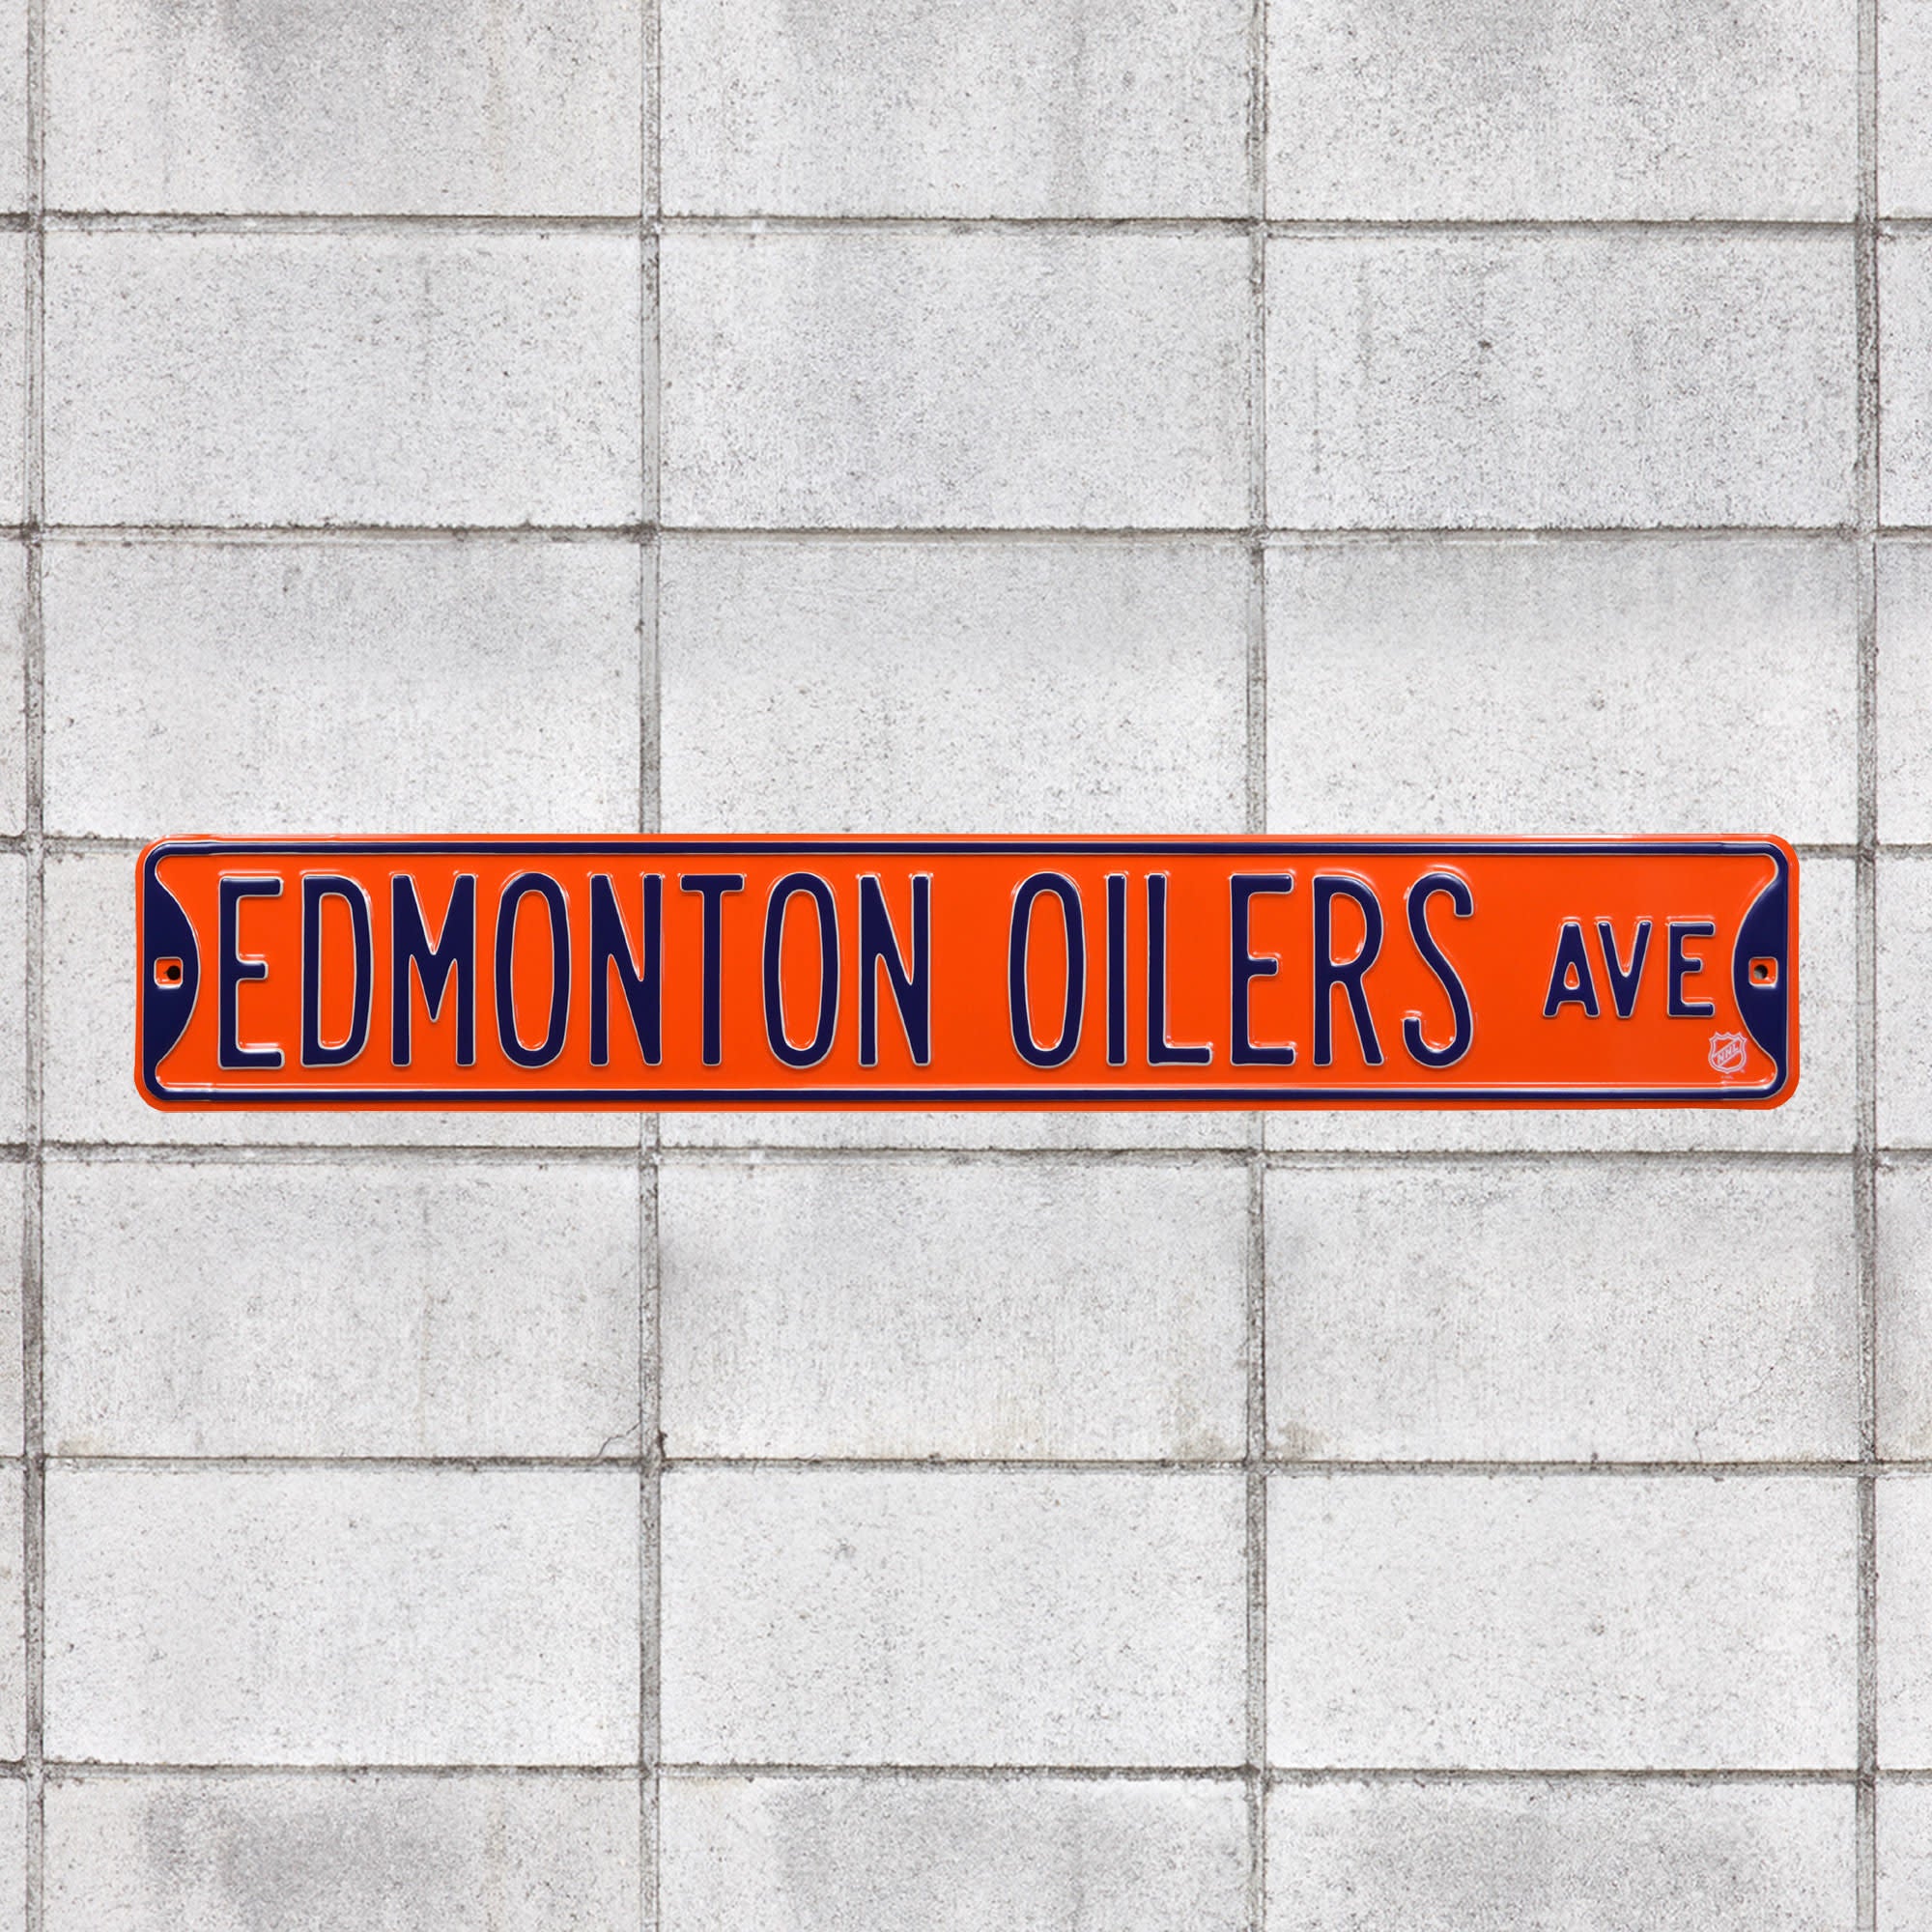 Edmonton Oilers: Edmonton Oilers Avenue - Officially Licensed NHL Metal Street Sign 36.0"W x 6.0"H by Fathead | 100% Steel